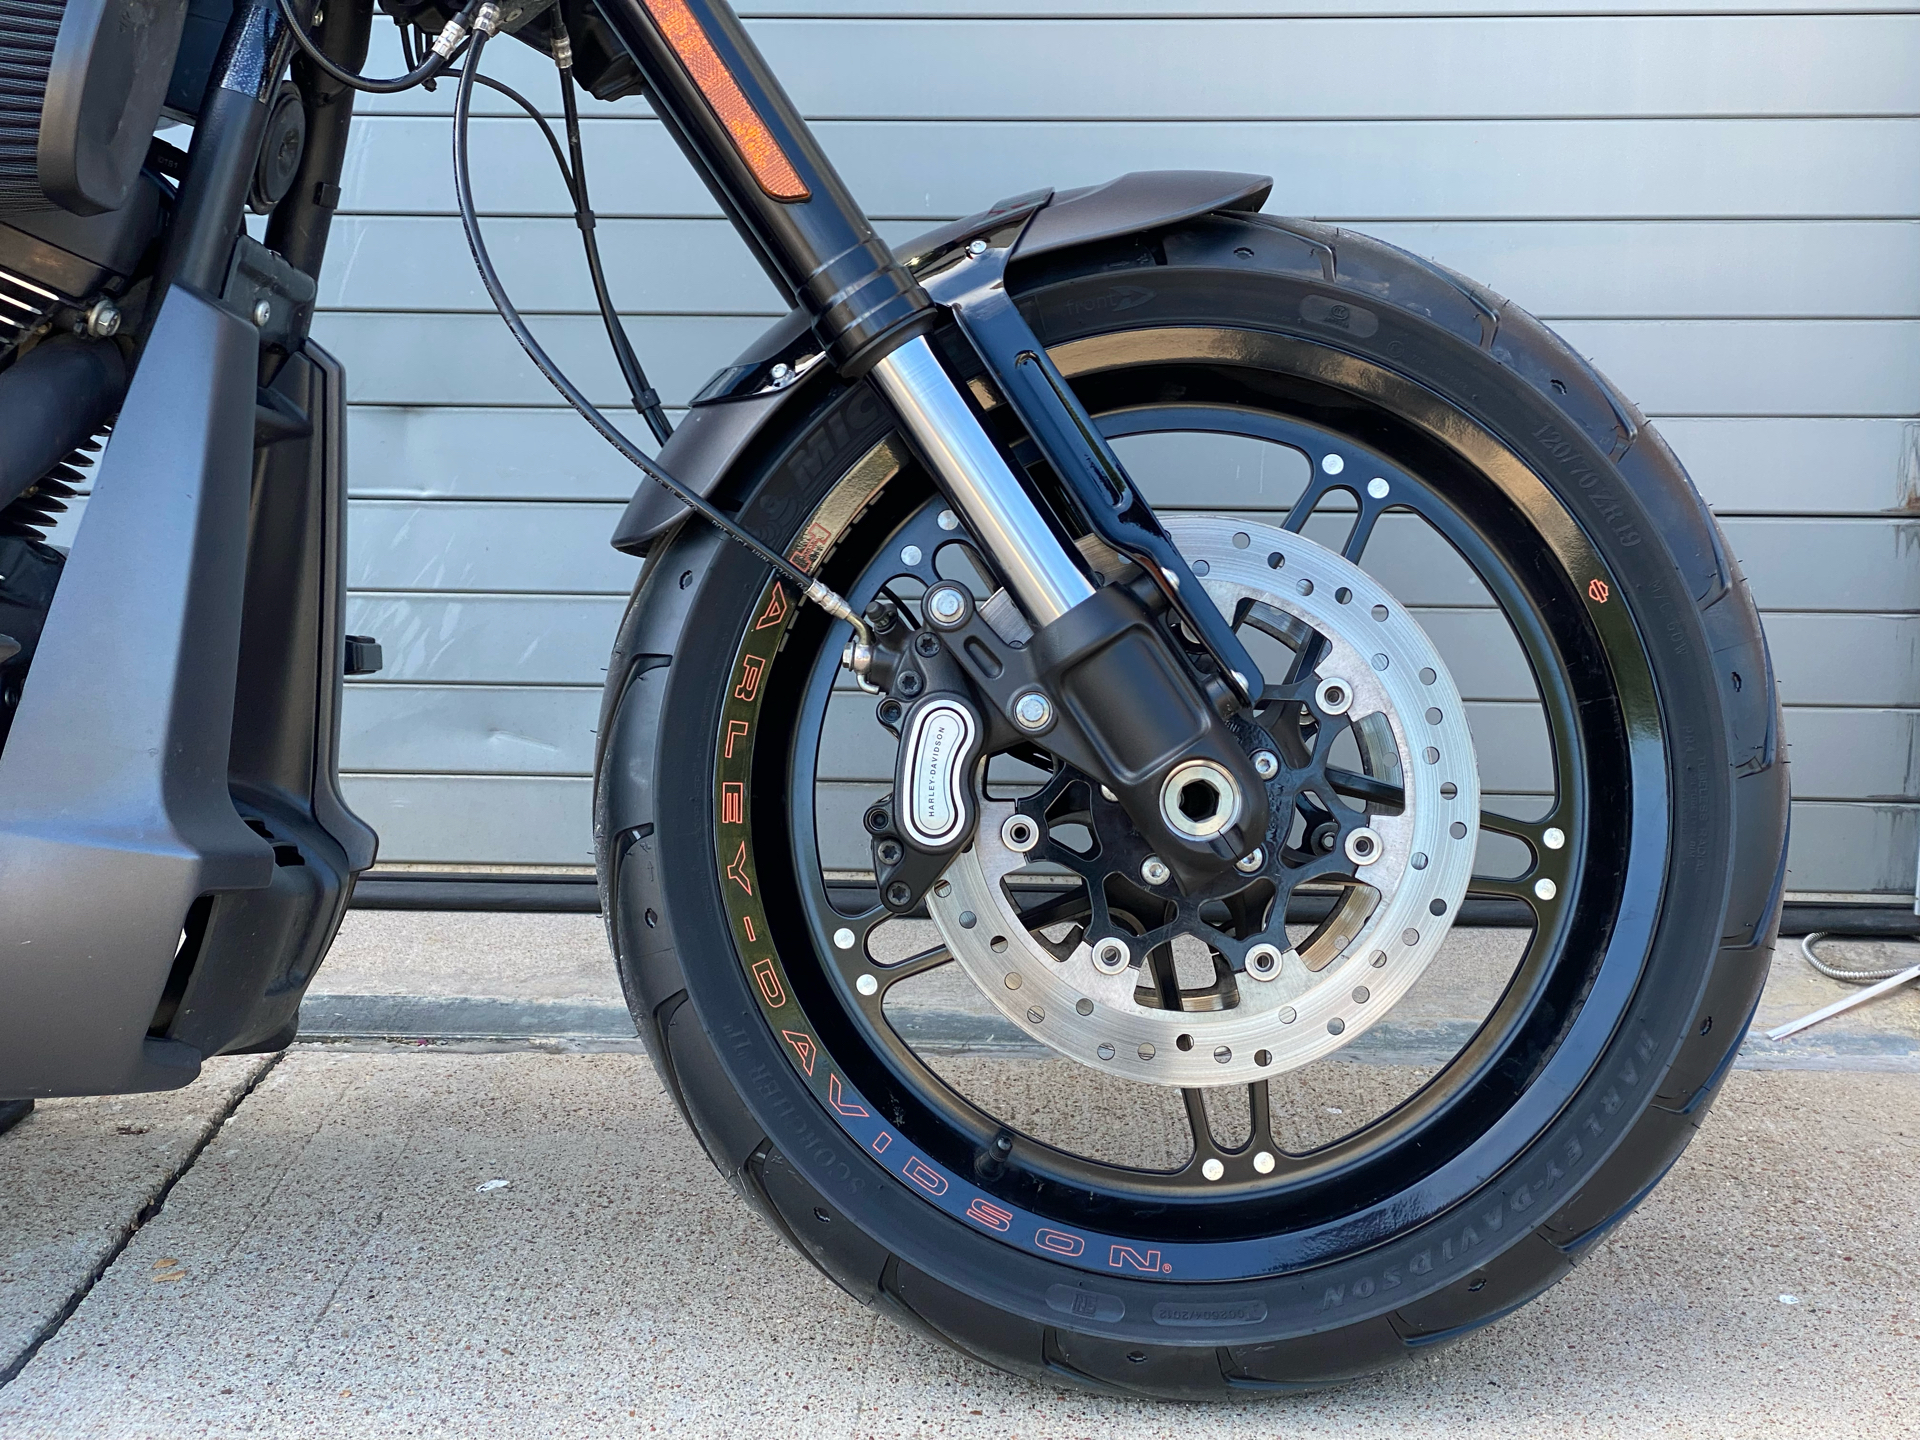 2019 Harley-Davidson FXDR™ 114 in Grand Prairie, Texas - Photo 4